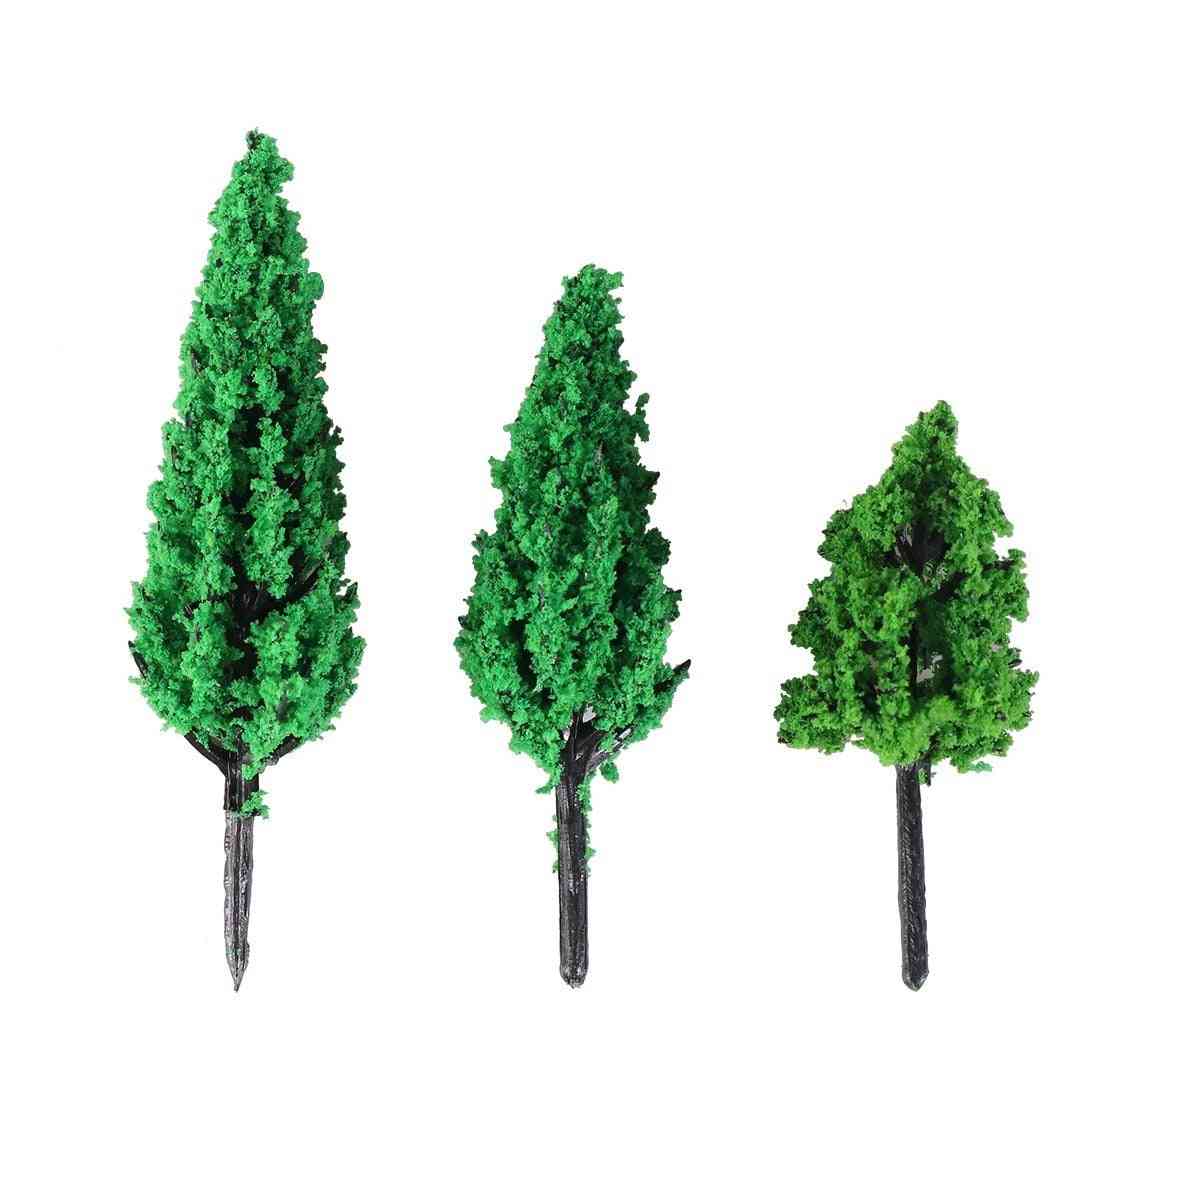 Trees Park Pine Poplar Forest Pagoda - Miniature Diorama Micro Layout Scenery Decoration